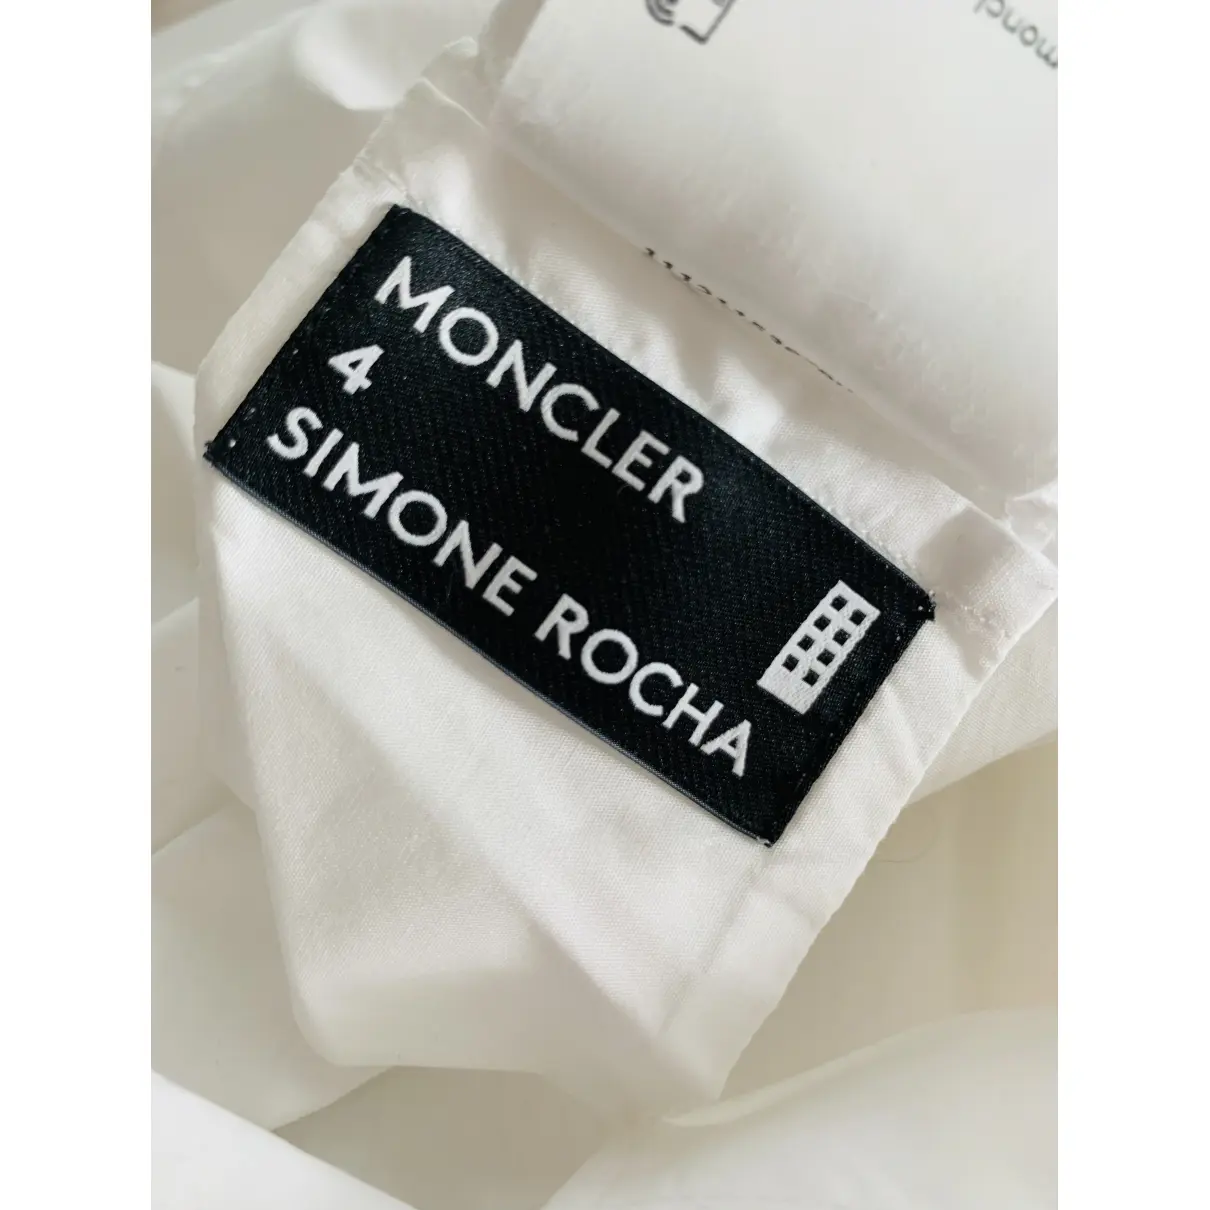 Moncler n°4 Simone Rocha shirt Moncler Genius